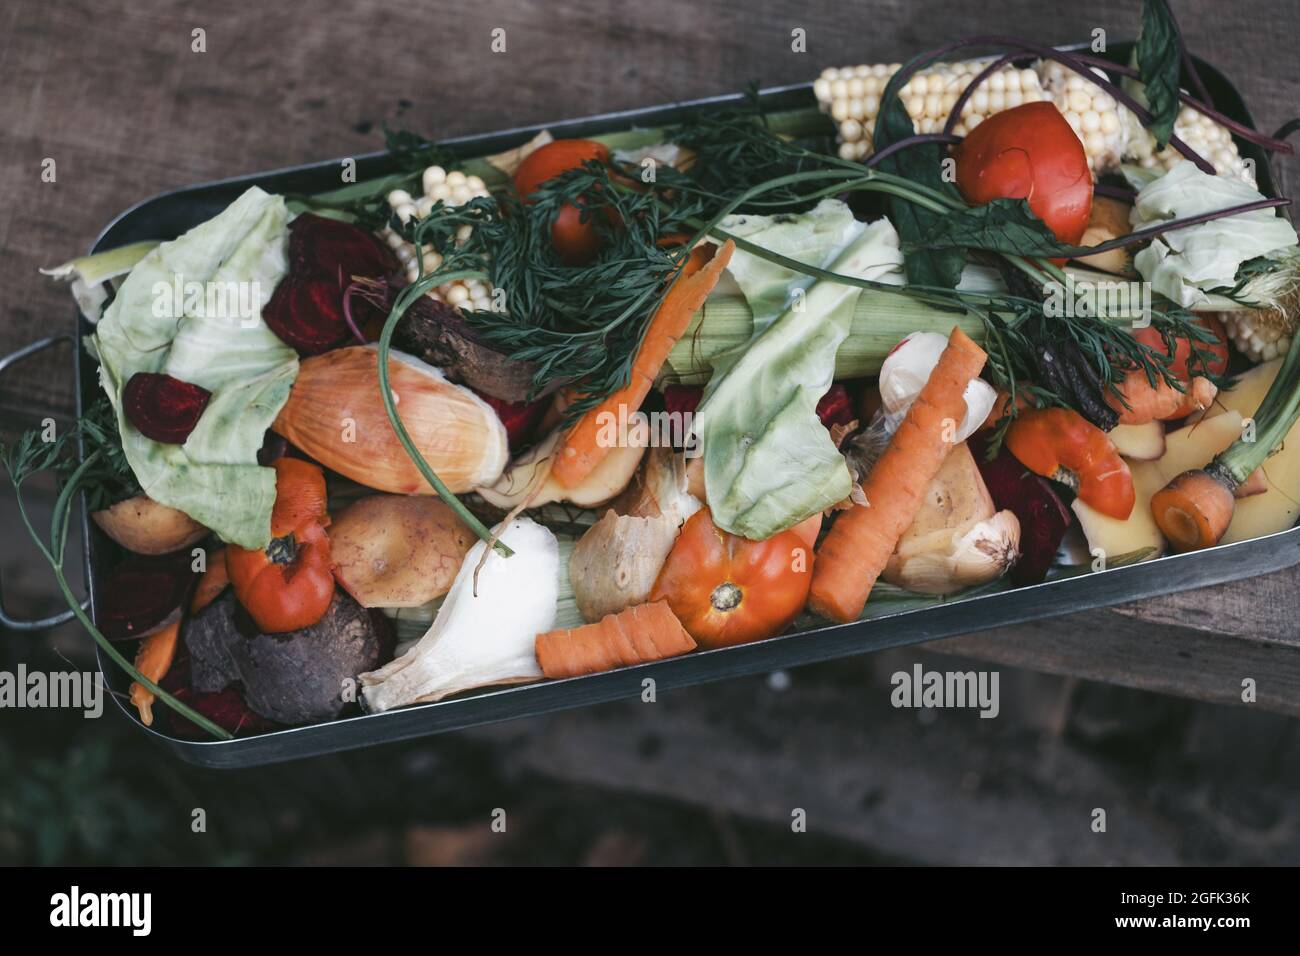 Fresh kitchen scraps in bin. Sustainable and zero waste. High quality photo Stock Photo